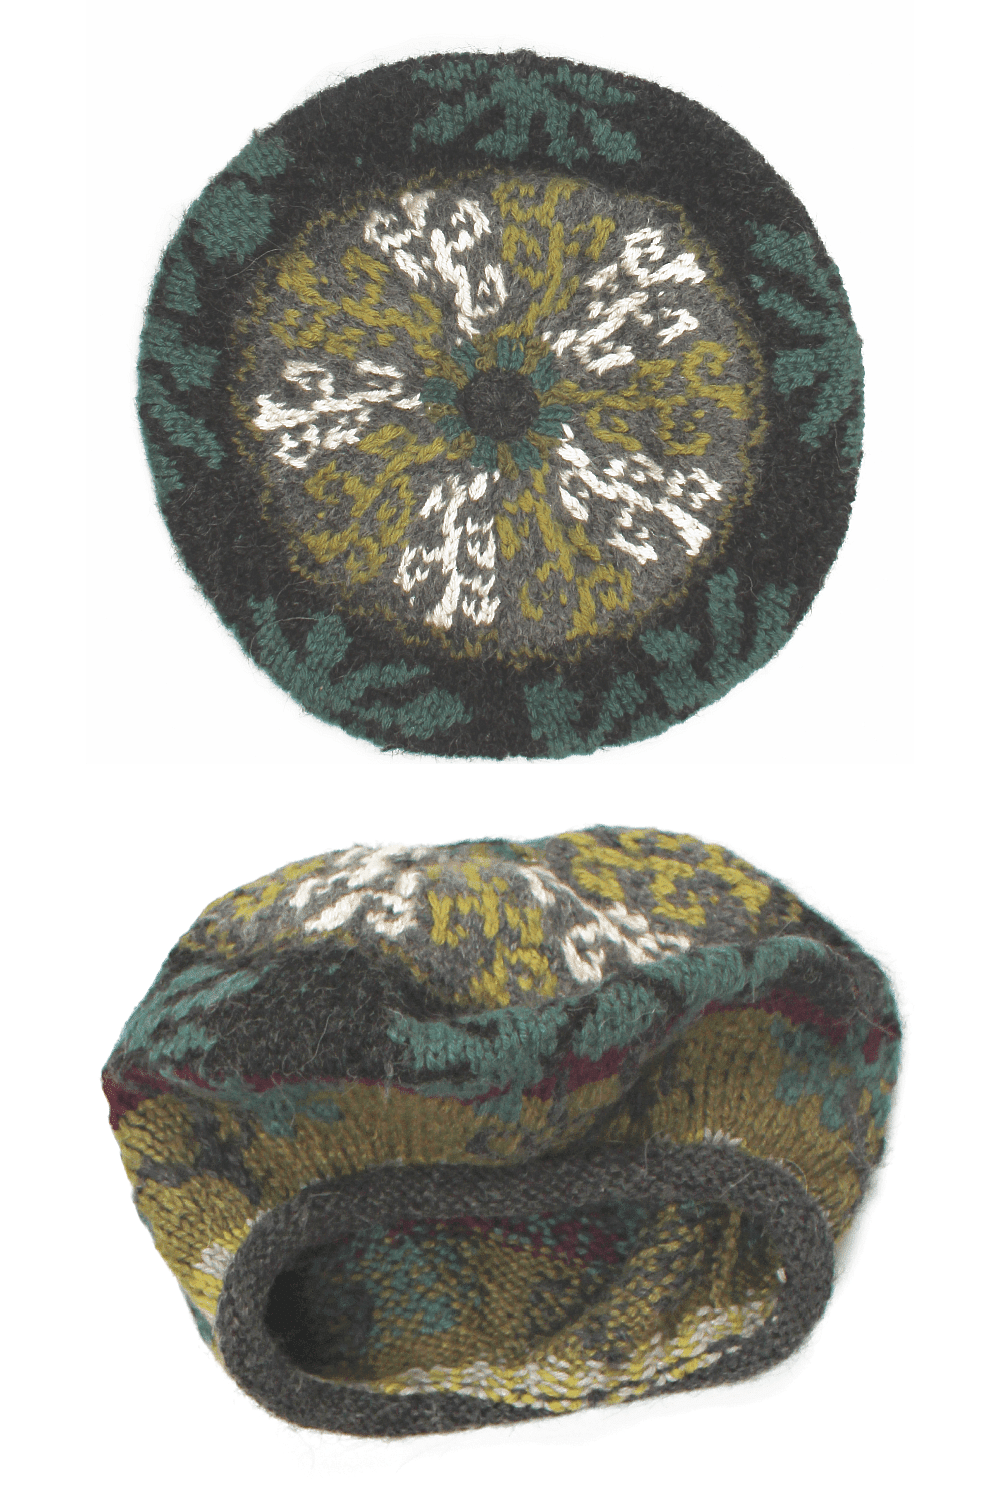 Women's handknit winter tam hat with a winter knit design.